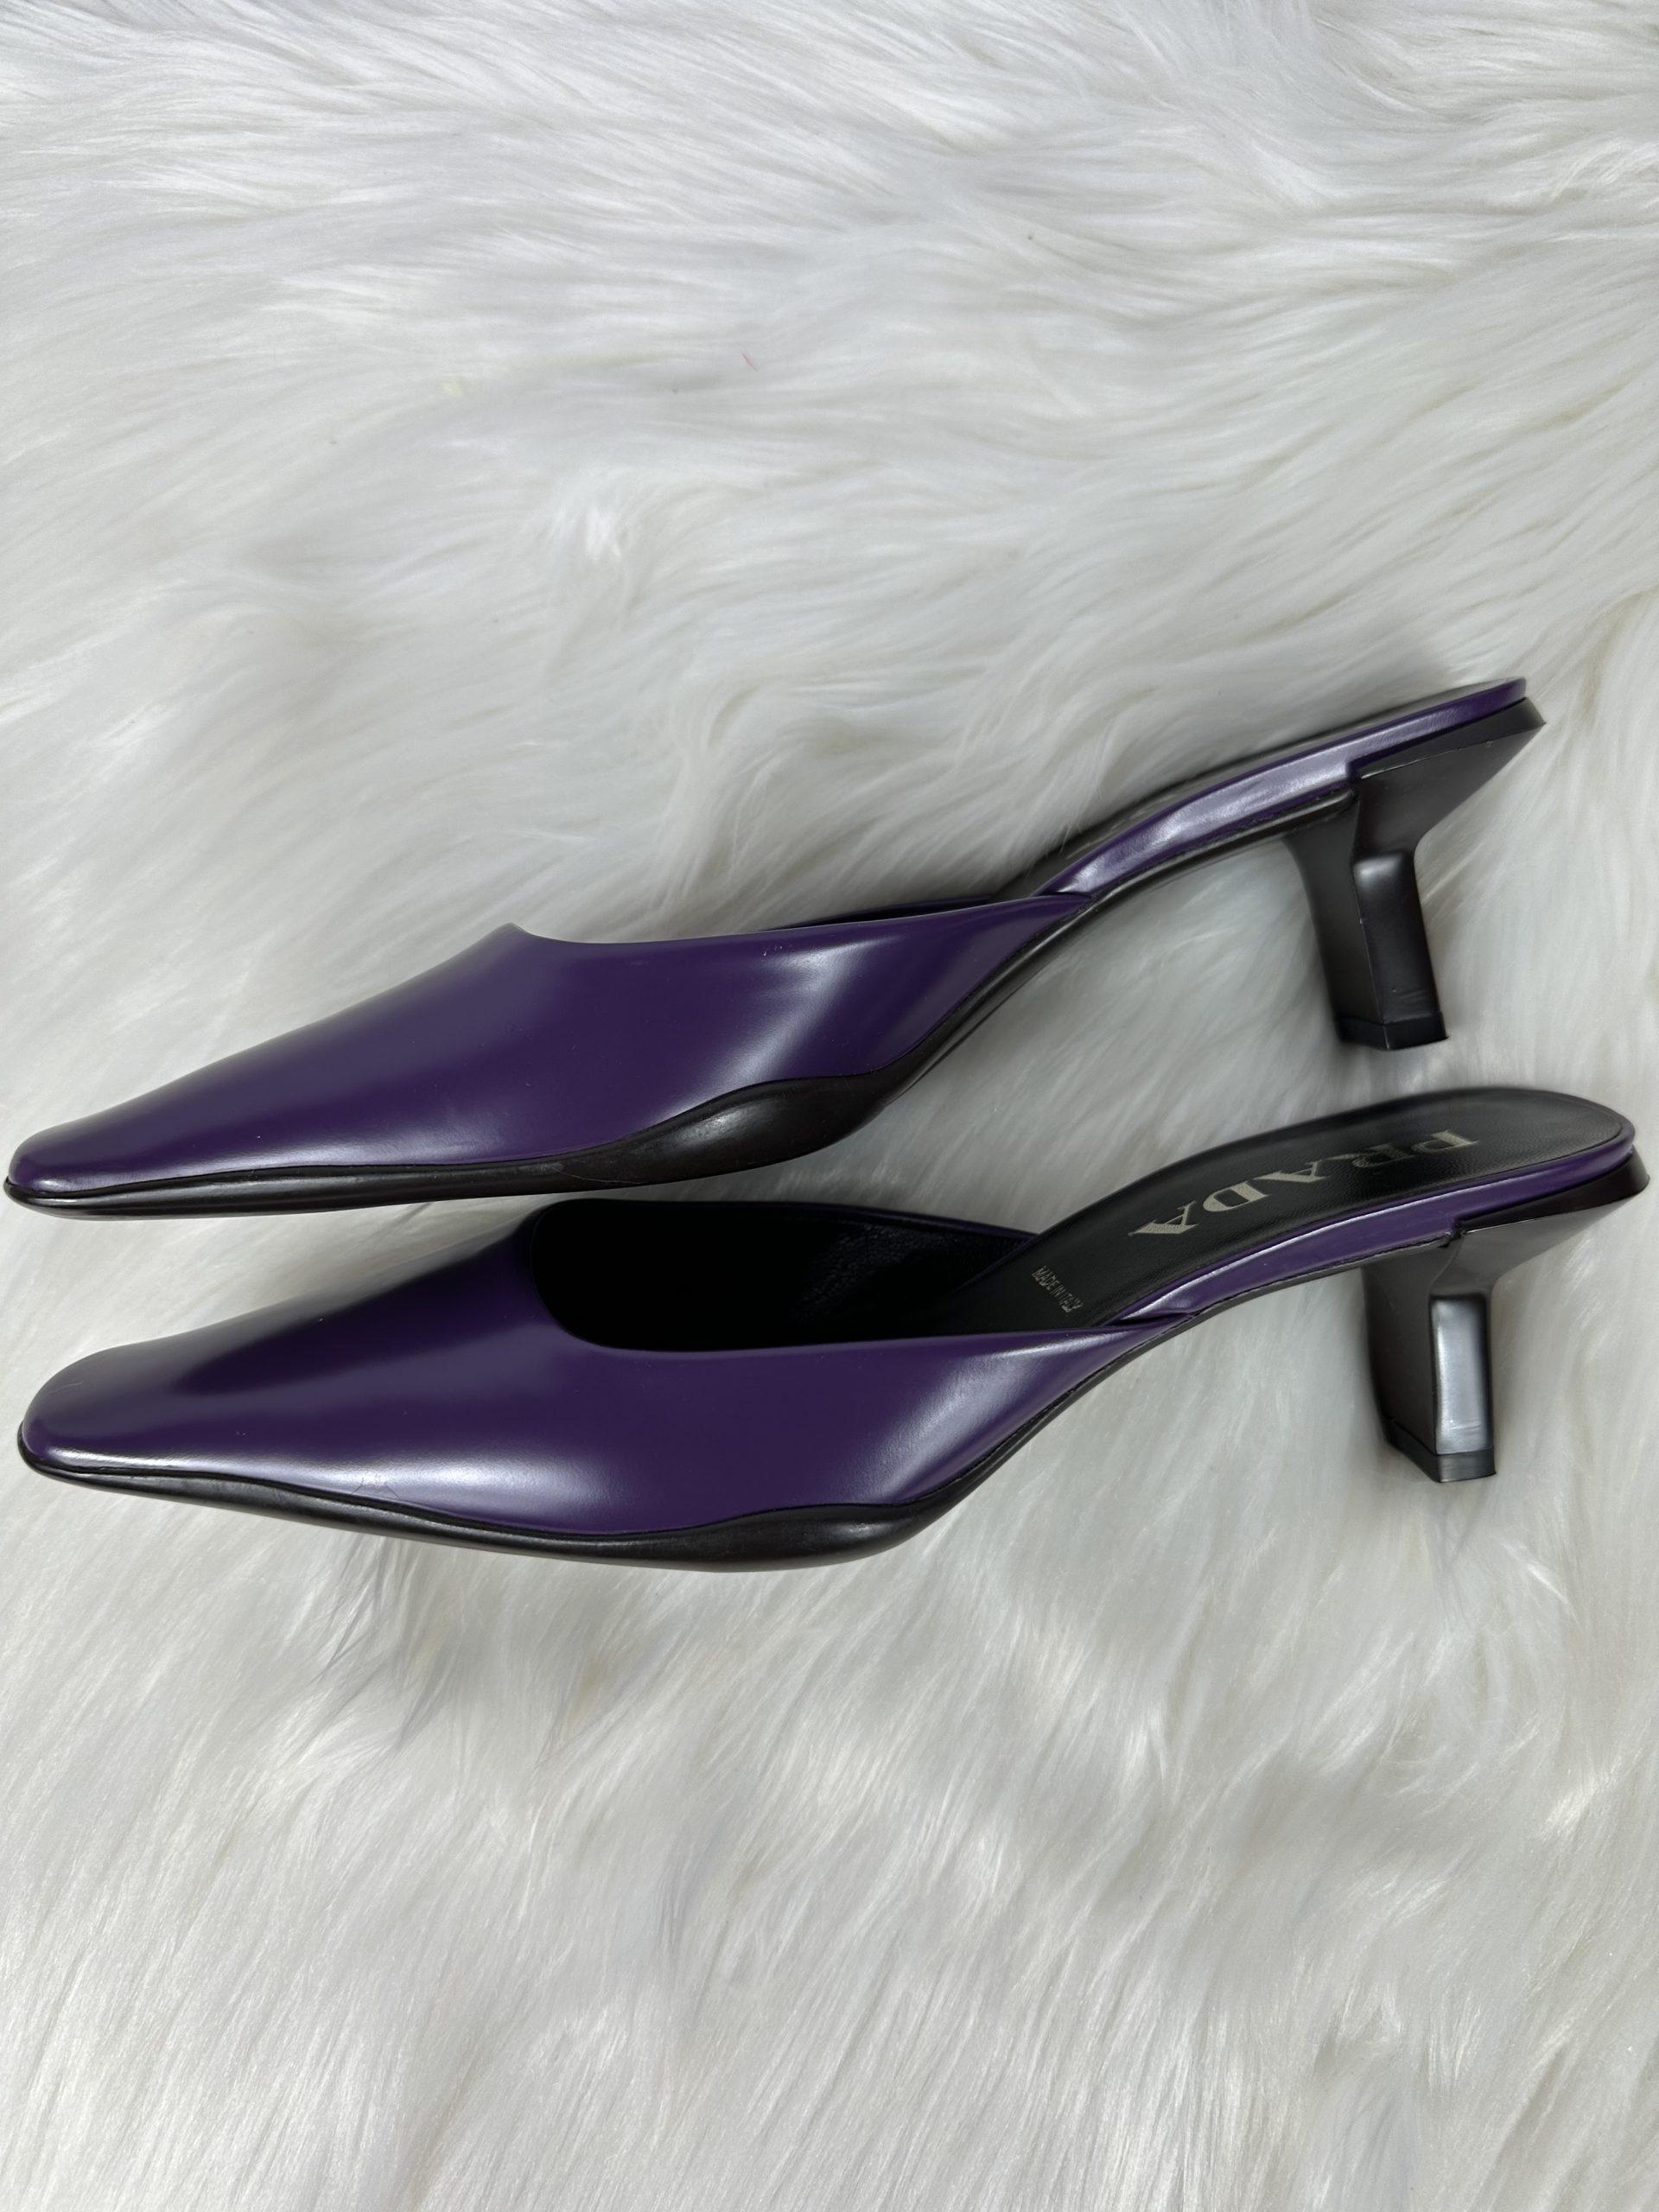 Prada high heels inspired by classic 50?s cars